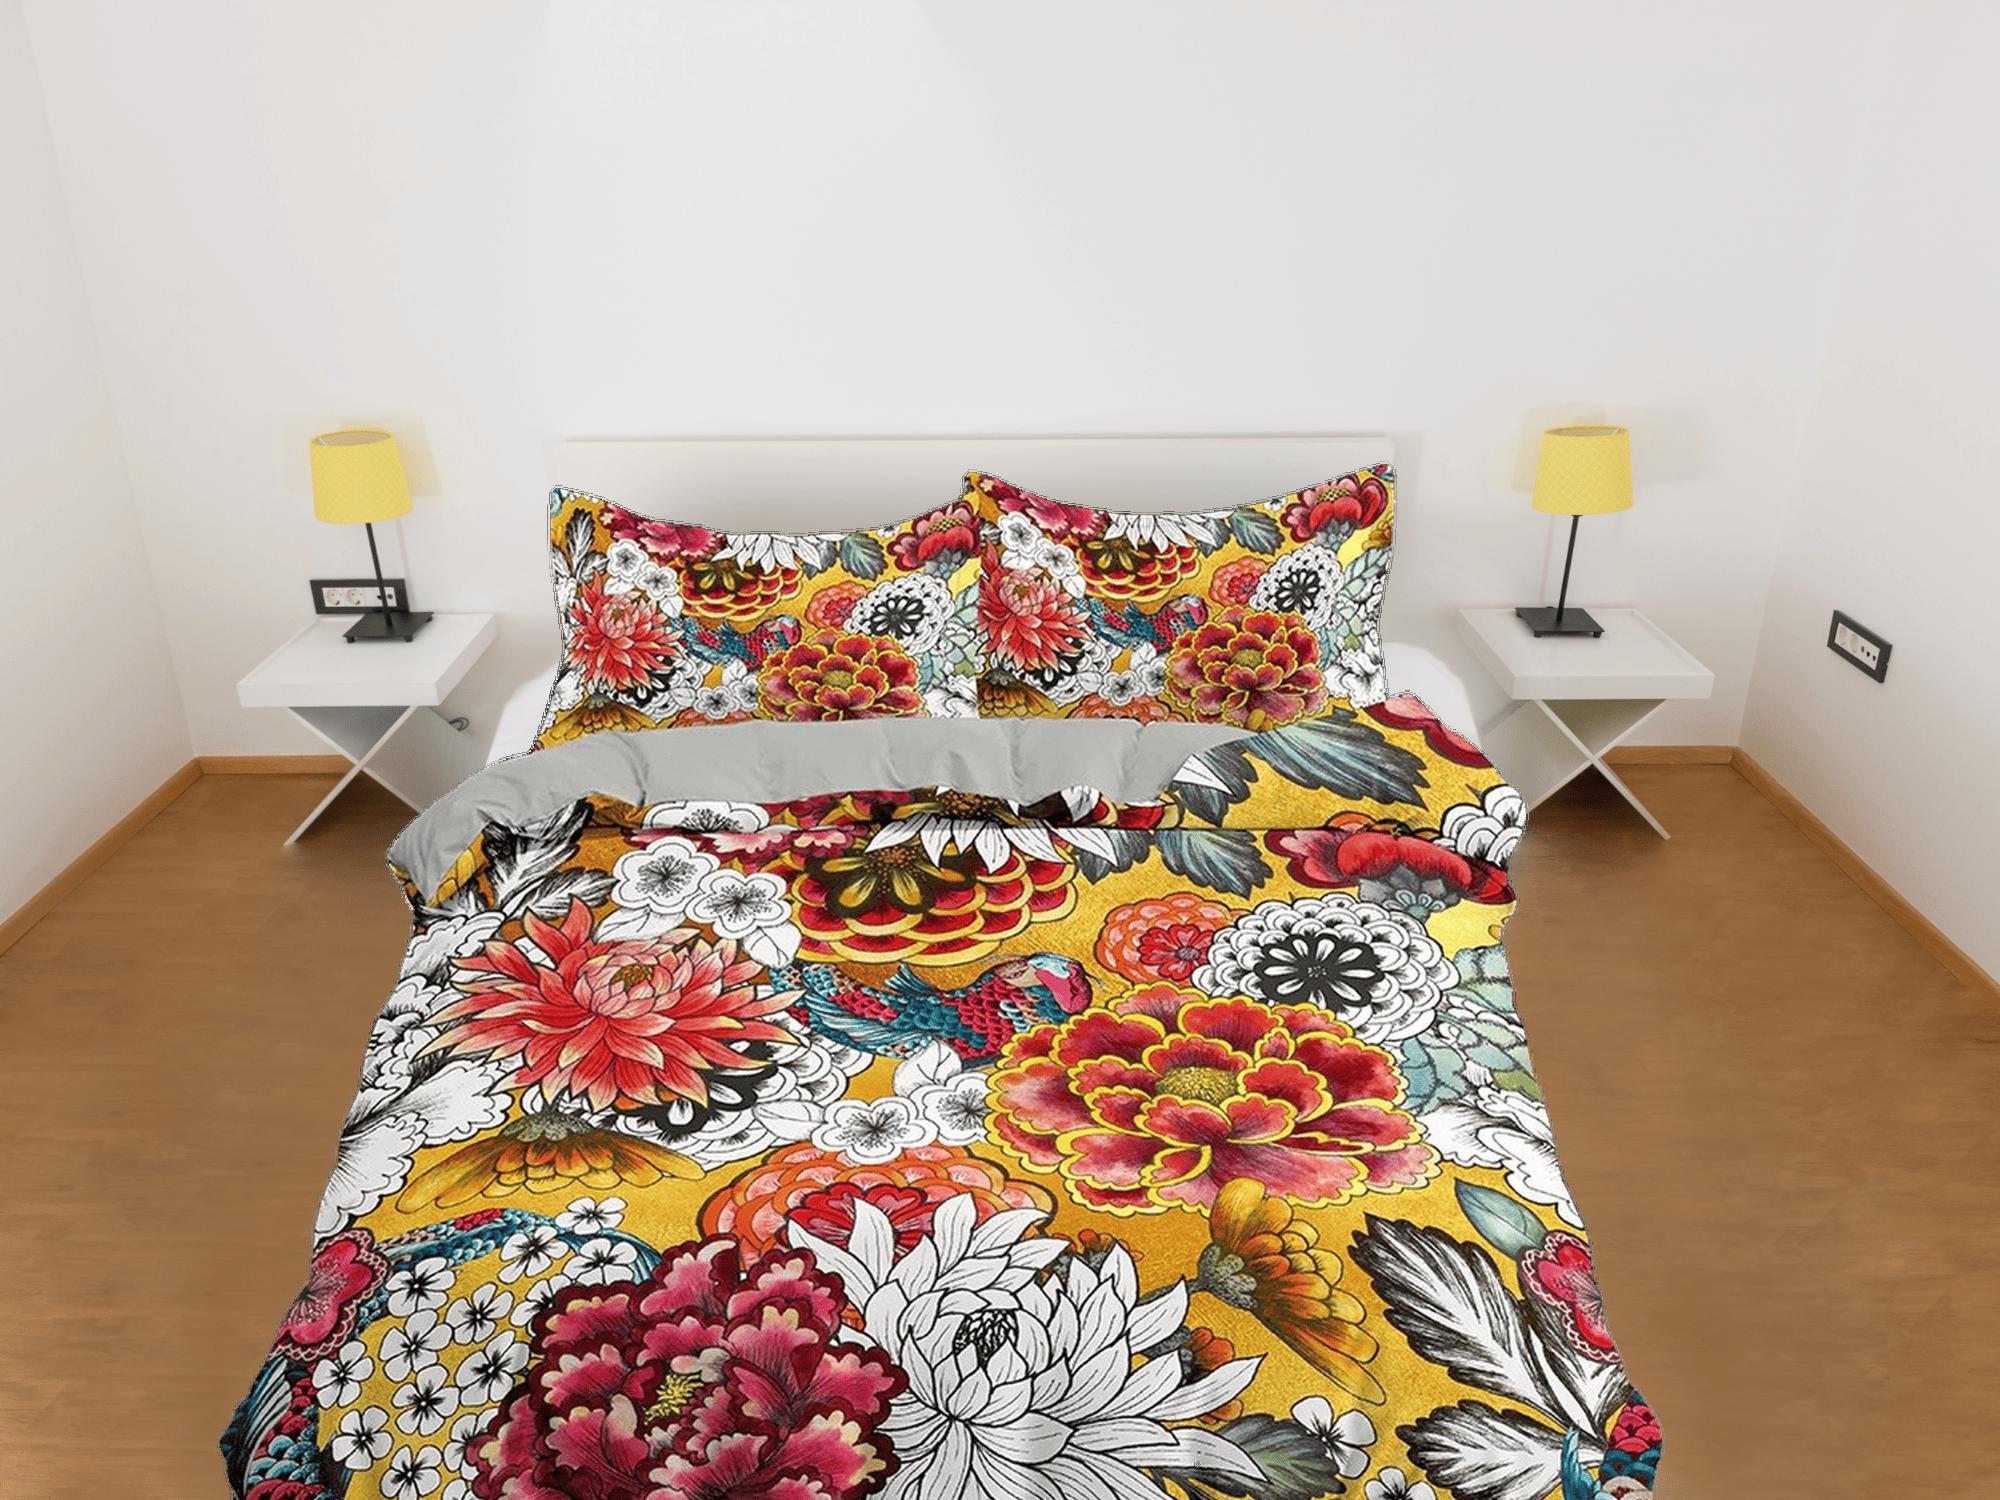 daintyduvet Colorful dahlia floral duvet cover colorful bedding, teen girl bedroom, baby girl crib bedding boho maximalist bedspread aesthetic bedding